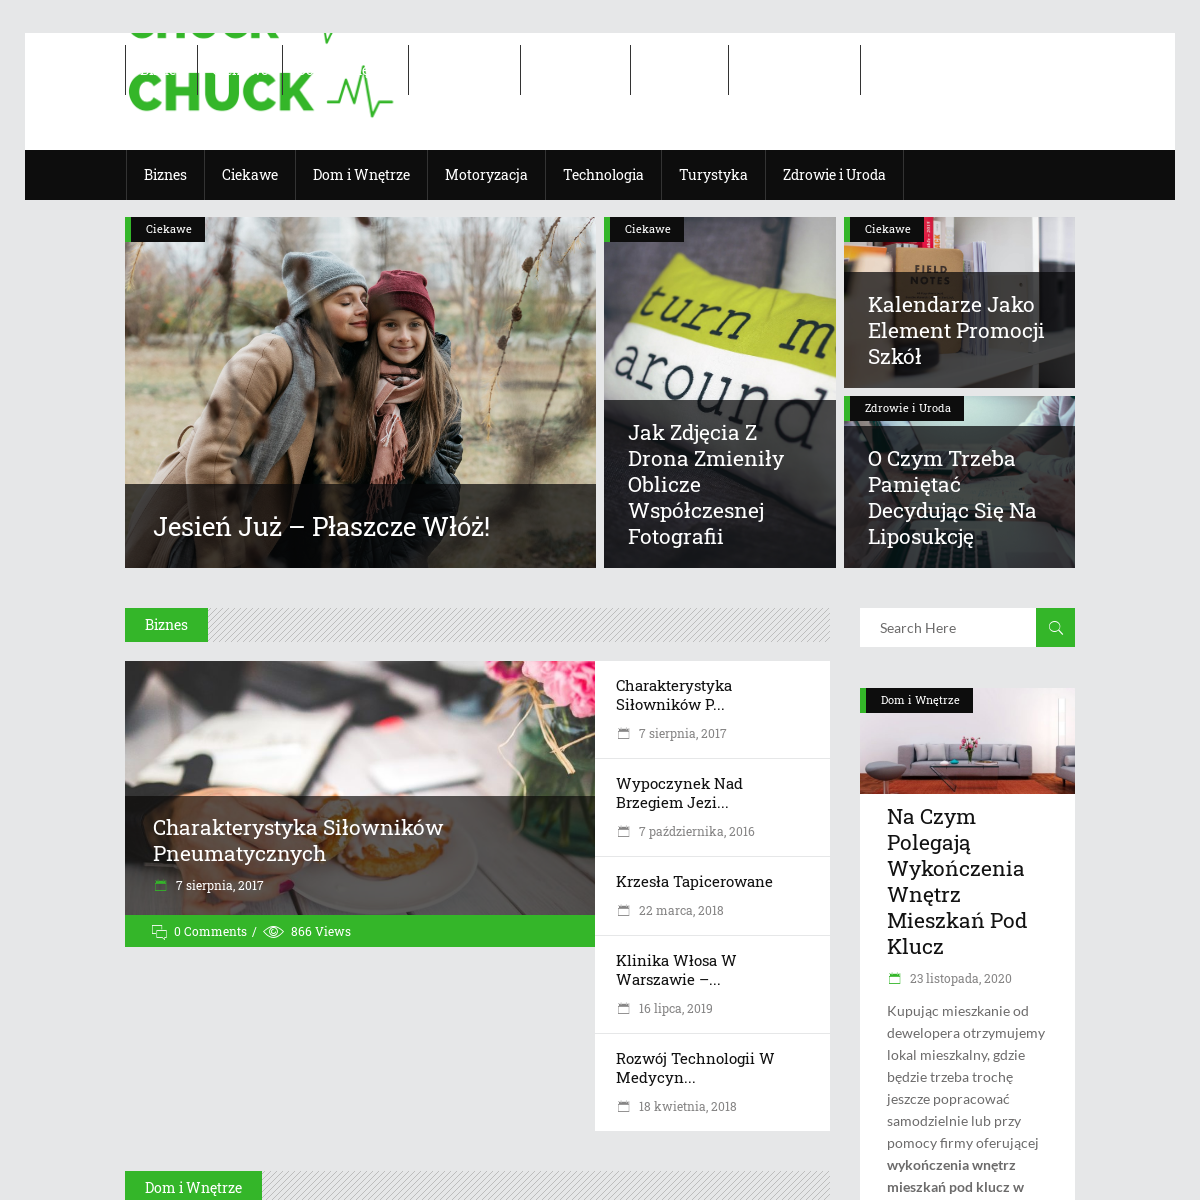 A complete backup of chuck.com.pl